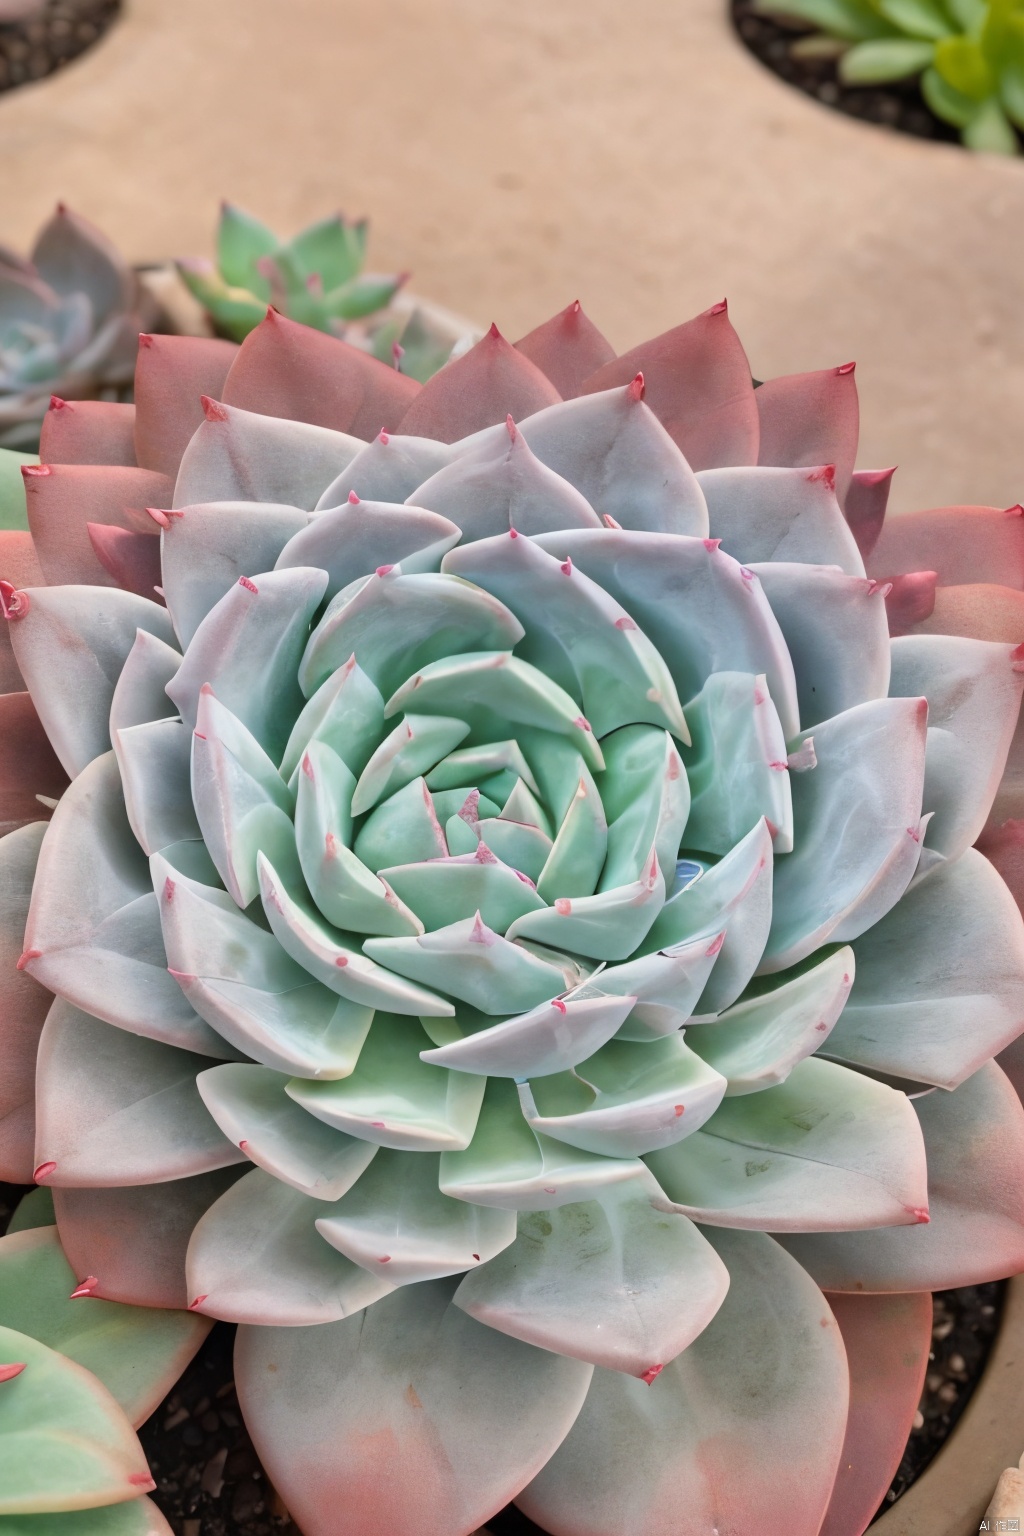 Succulent_Plants,succulent plants,pink-blue-red-purple-green theme,close-up, macro shot, outdoor